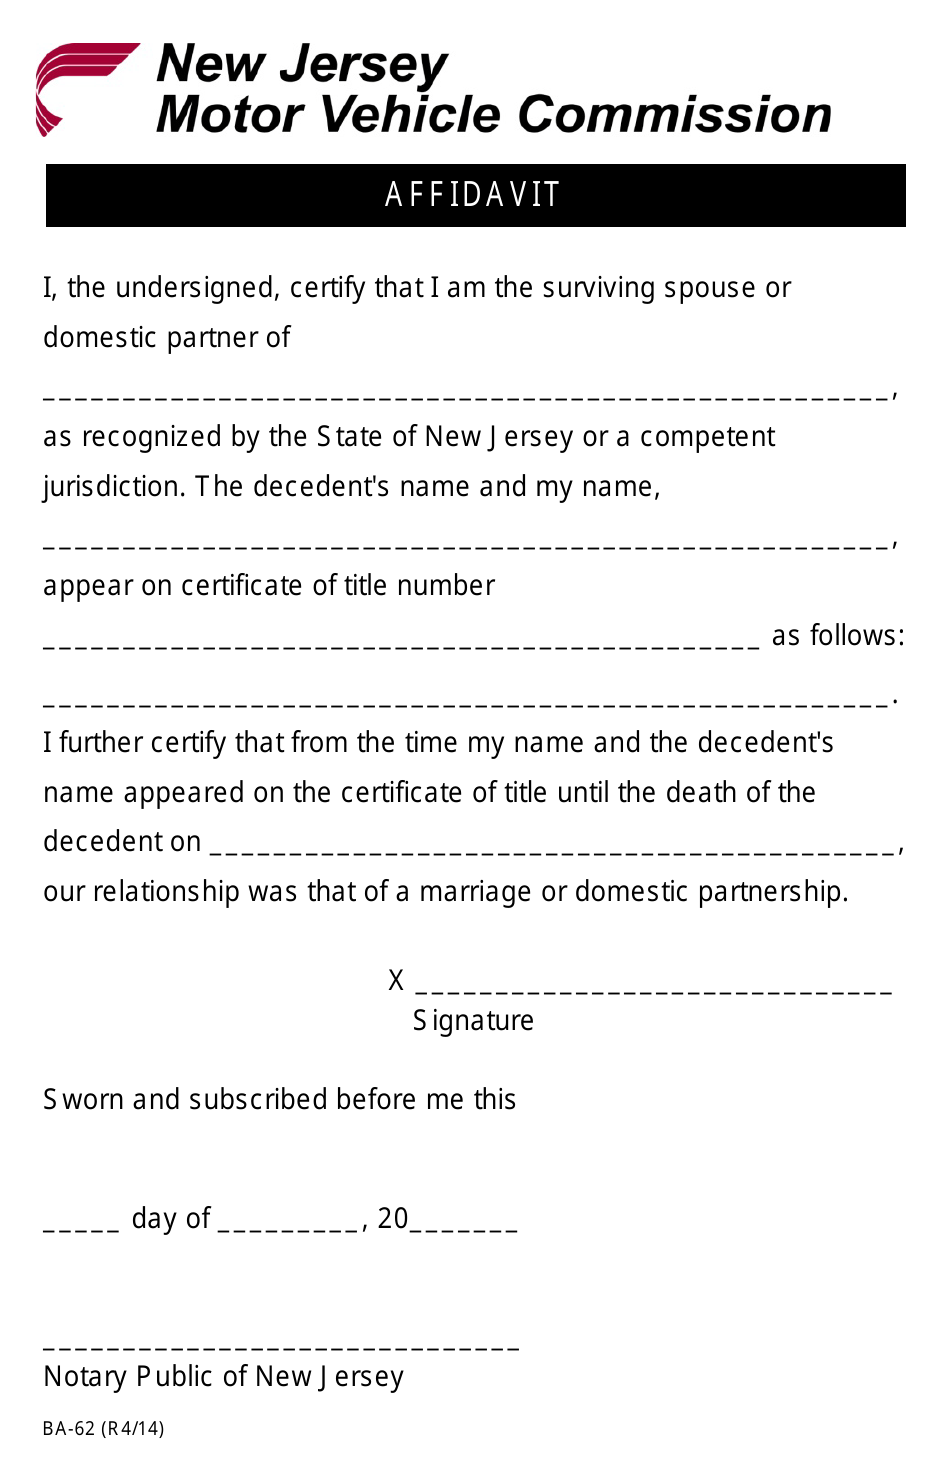 Form BA-62 Affidavit of Surviving Spouse - New Jersey, Page 1